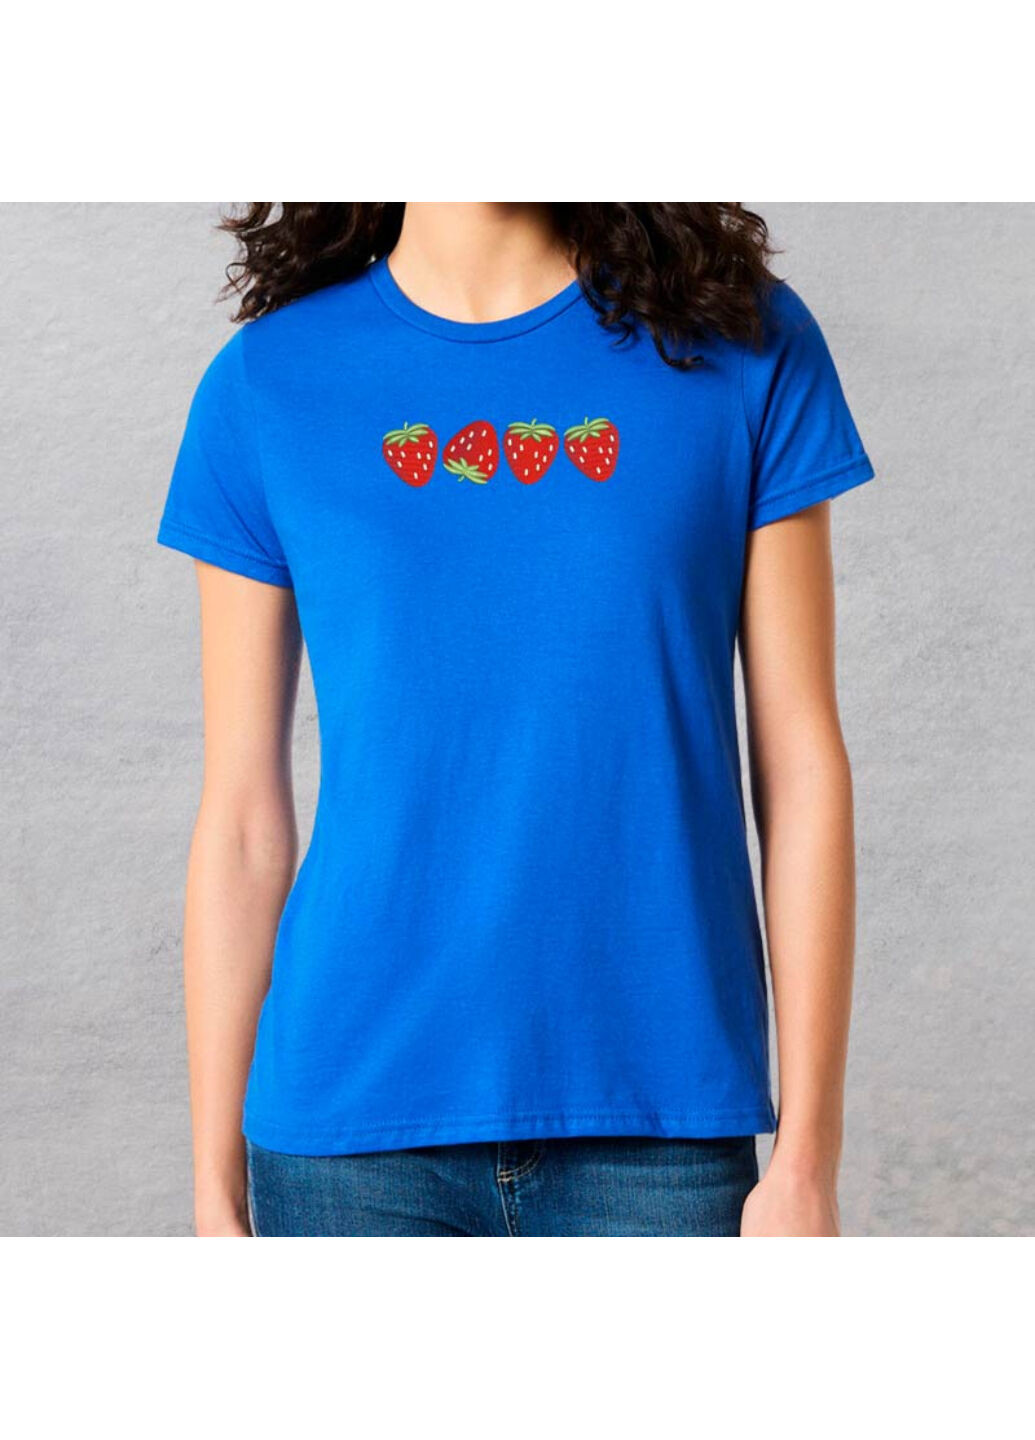 Синяя футболка з вишивкою полуничка 02-1 женская синий l No Brand